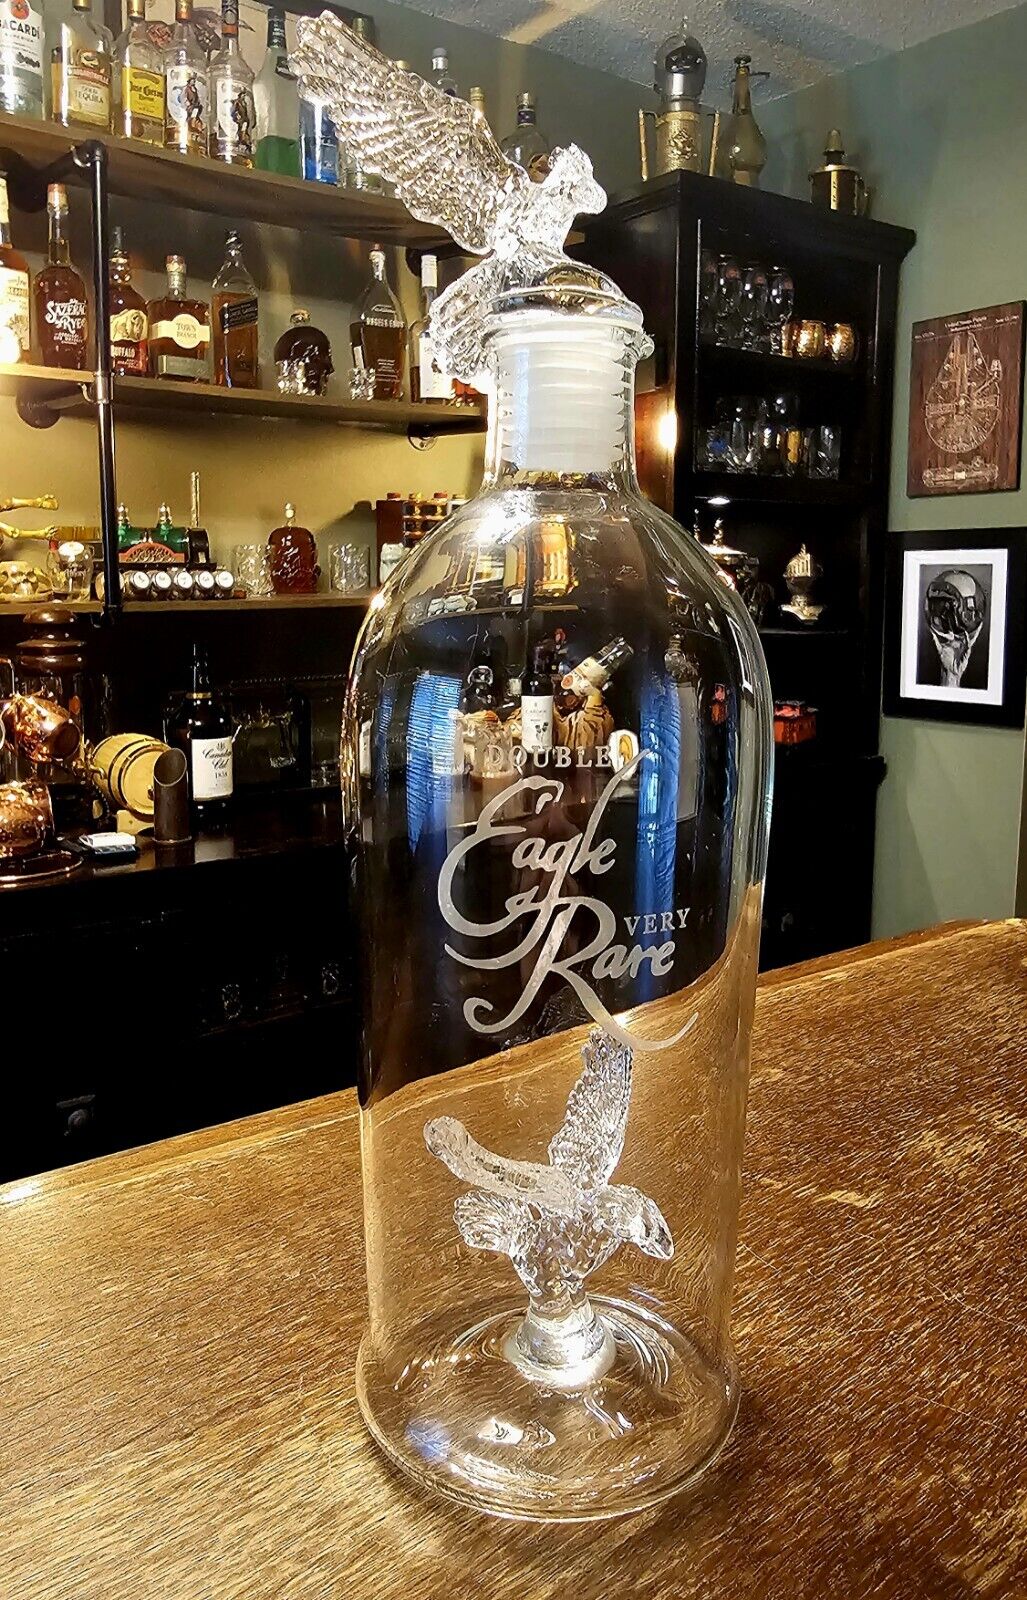 Double Eagle Very Rare 20-Year Kentucky Straight Bourbon Glass Bottle Replica